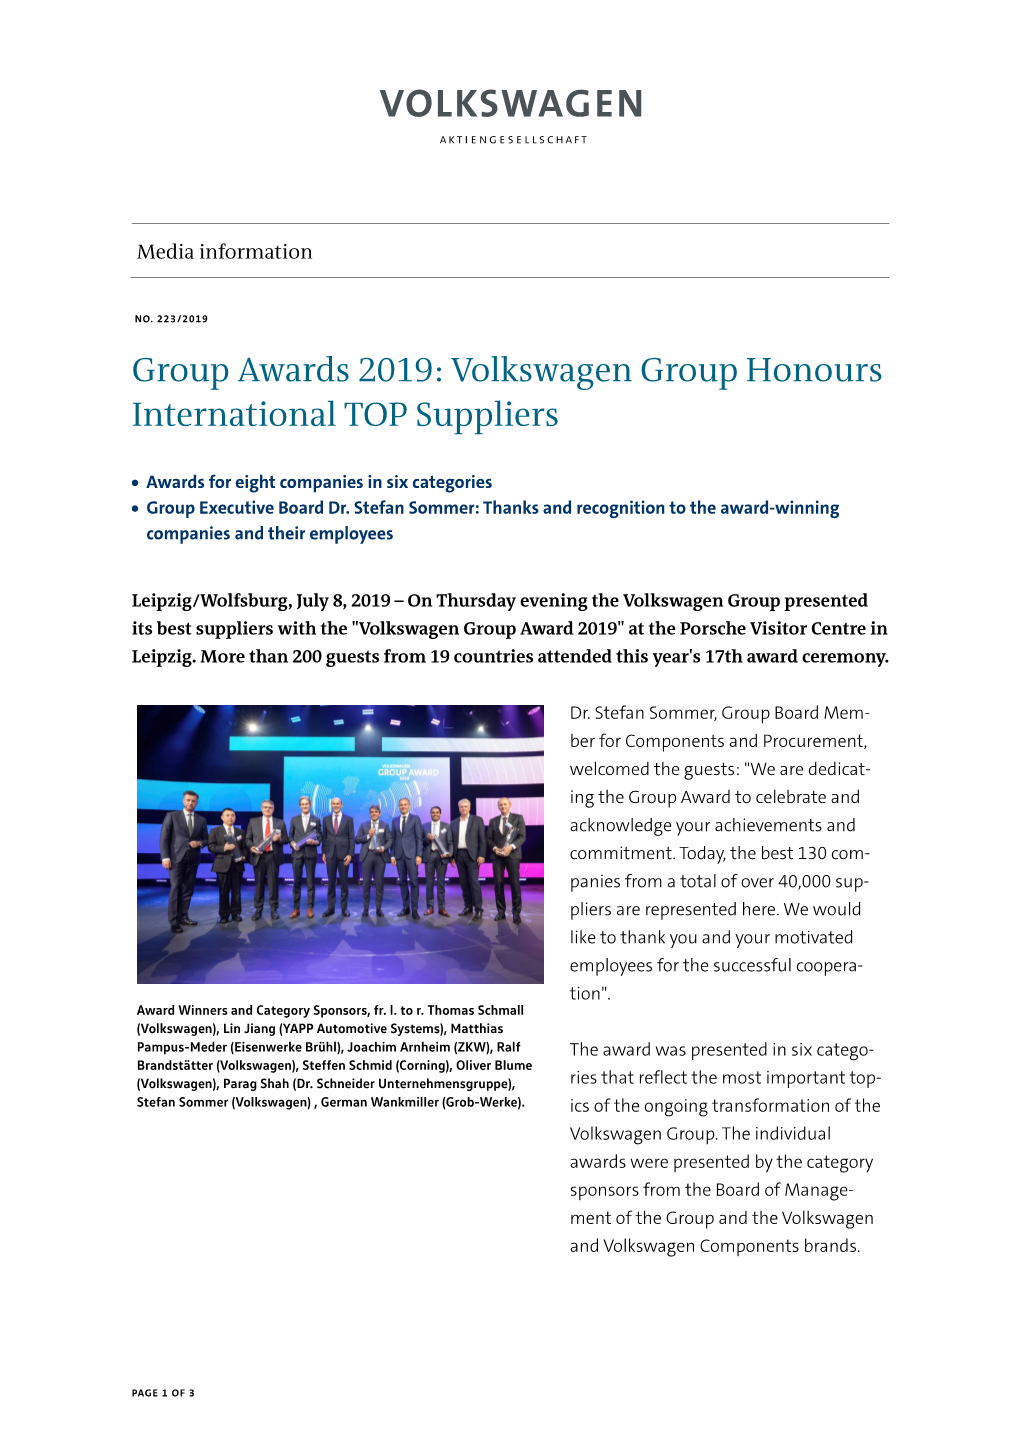 Group Awards 2019: Volkswagen Group Honours International TOP Suppliers